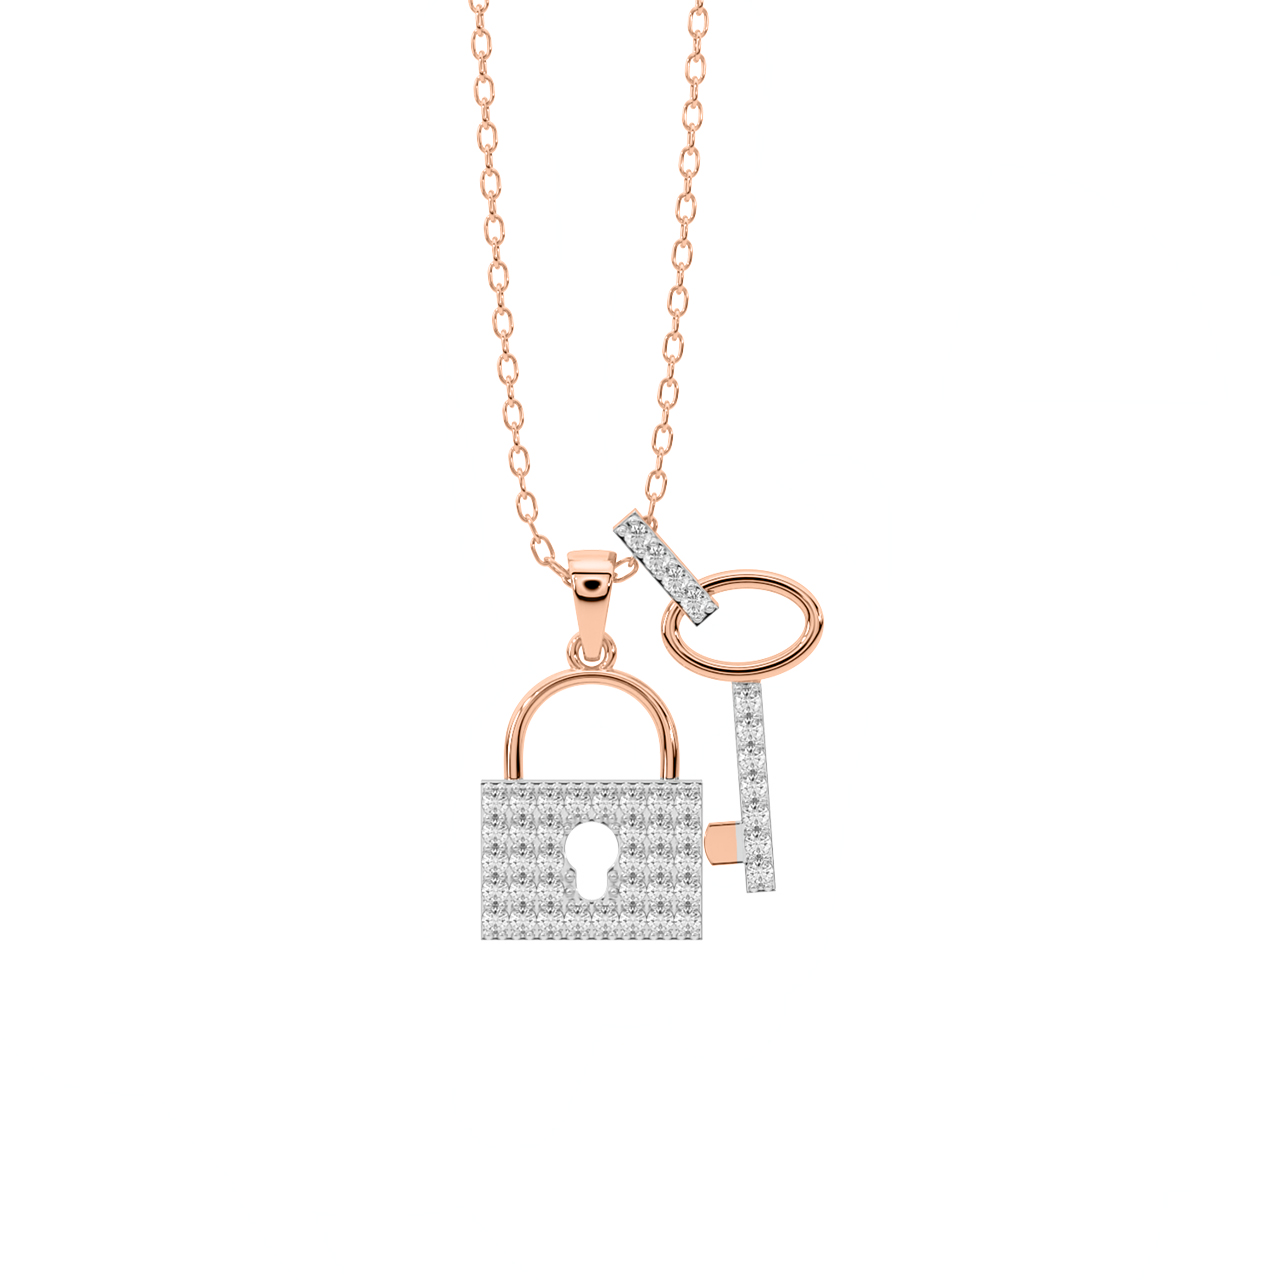 The Lock And Key Diamond Pendant